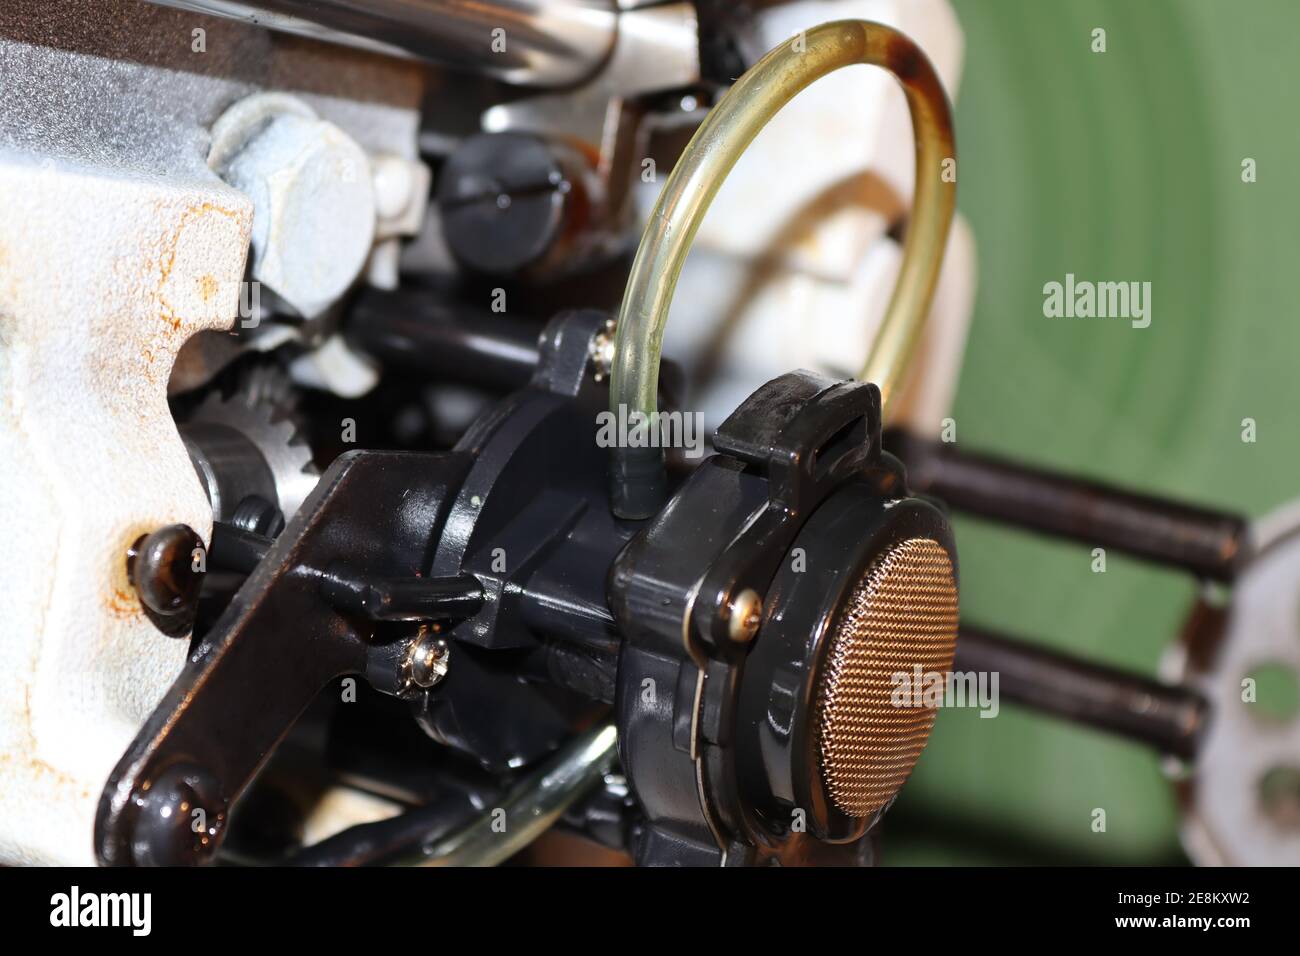 Aceite de máquina de coser fotografías e imágenes de alta resolución - Alamy